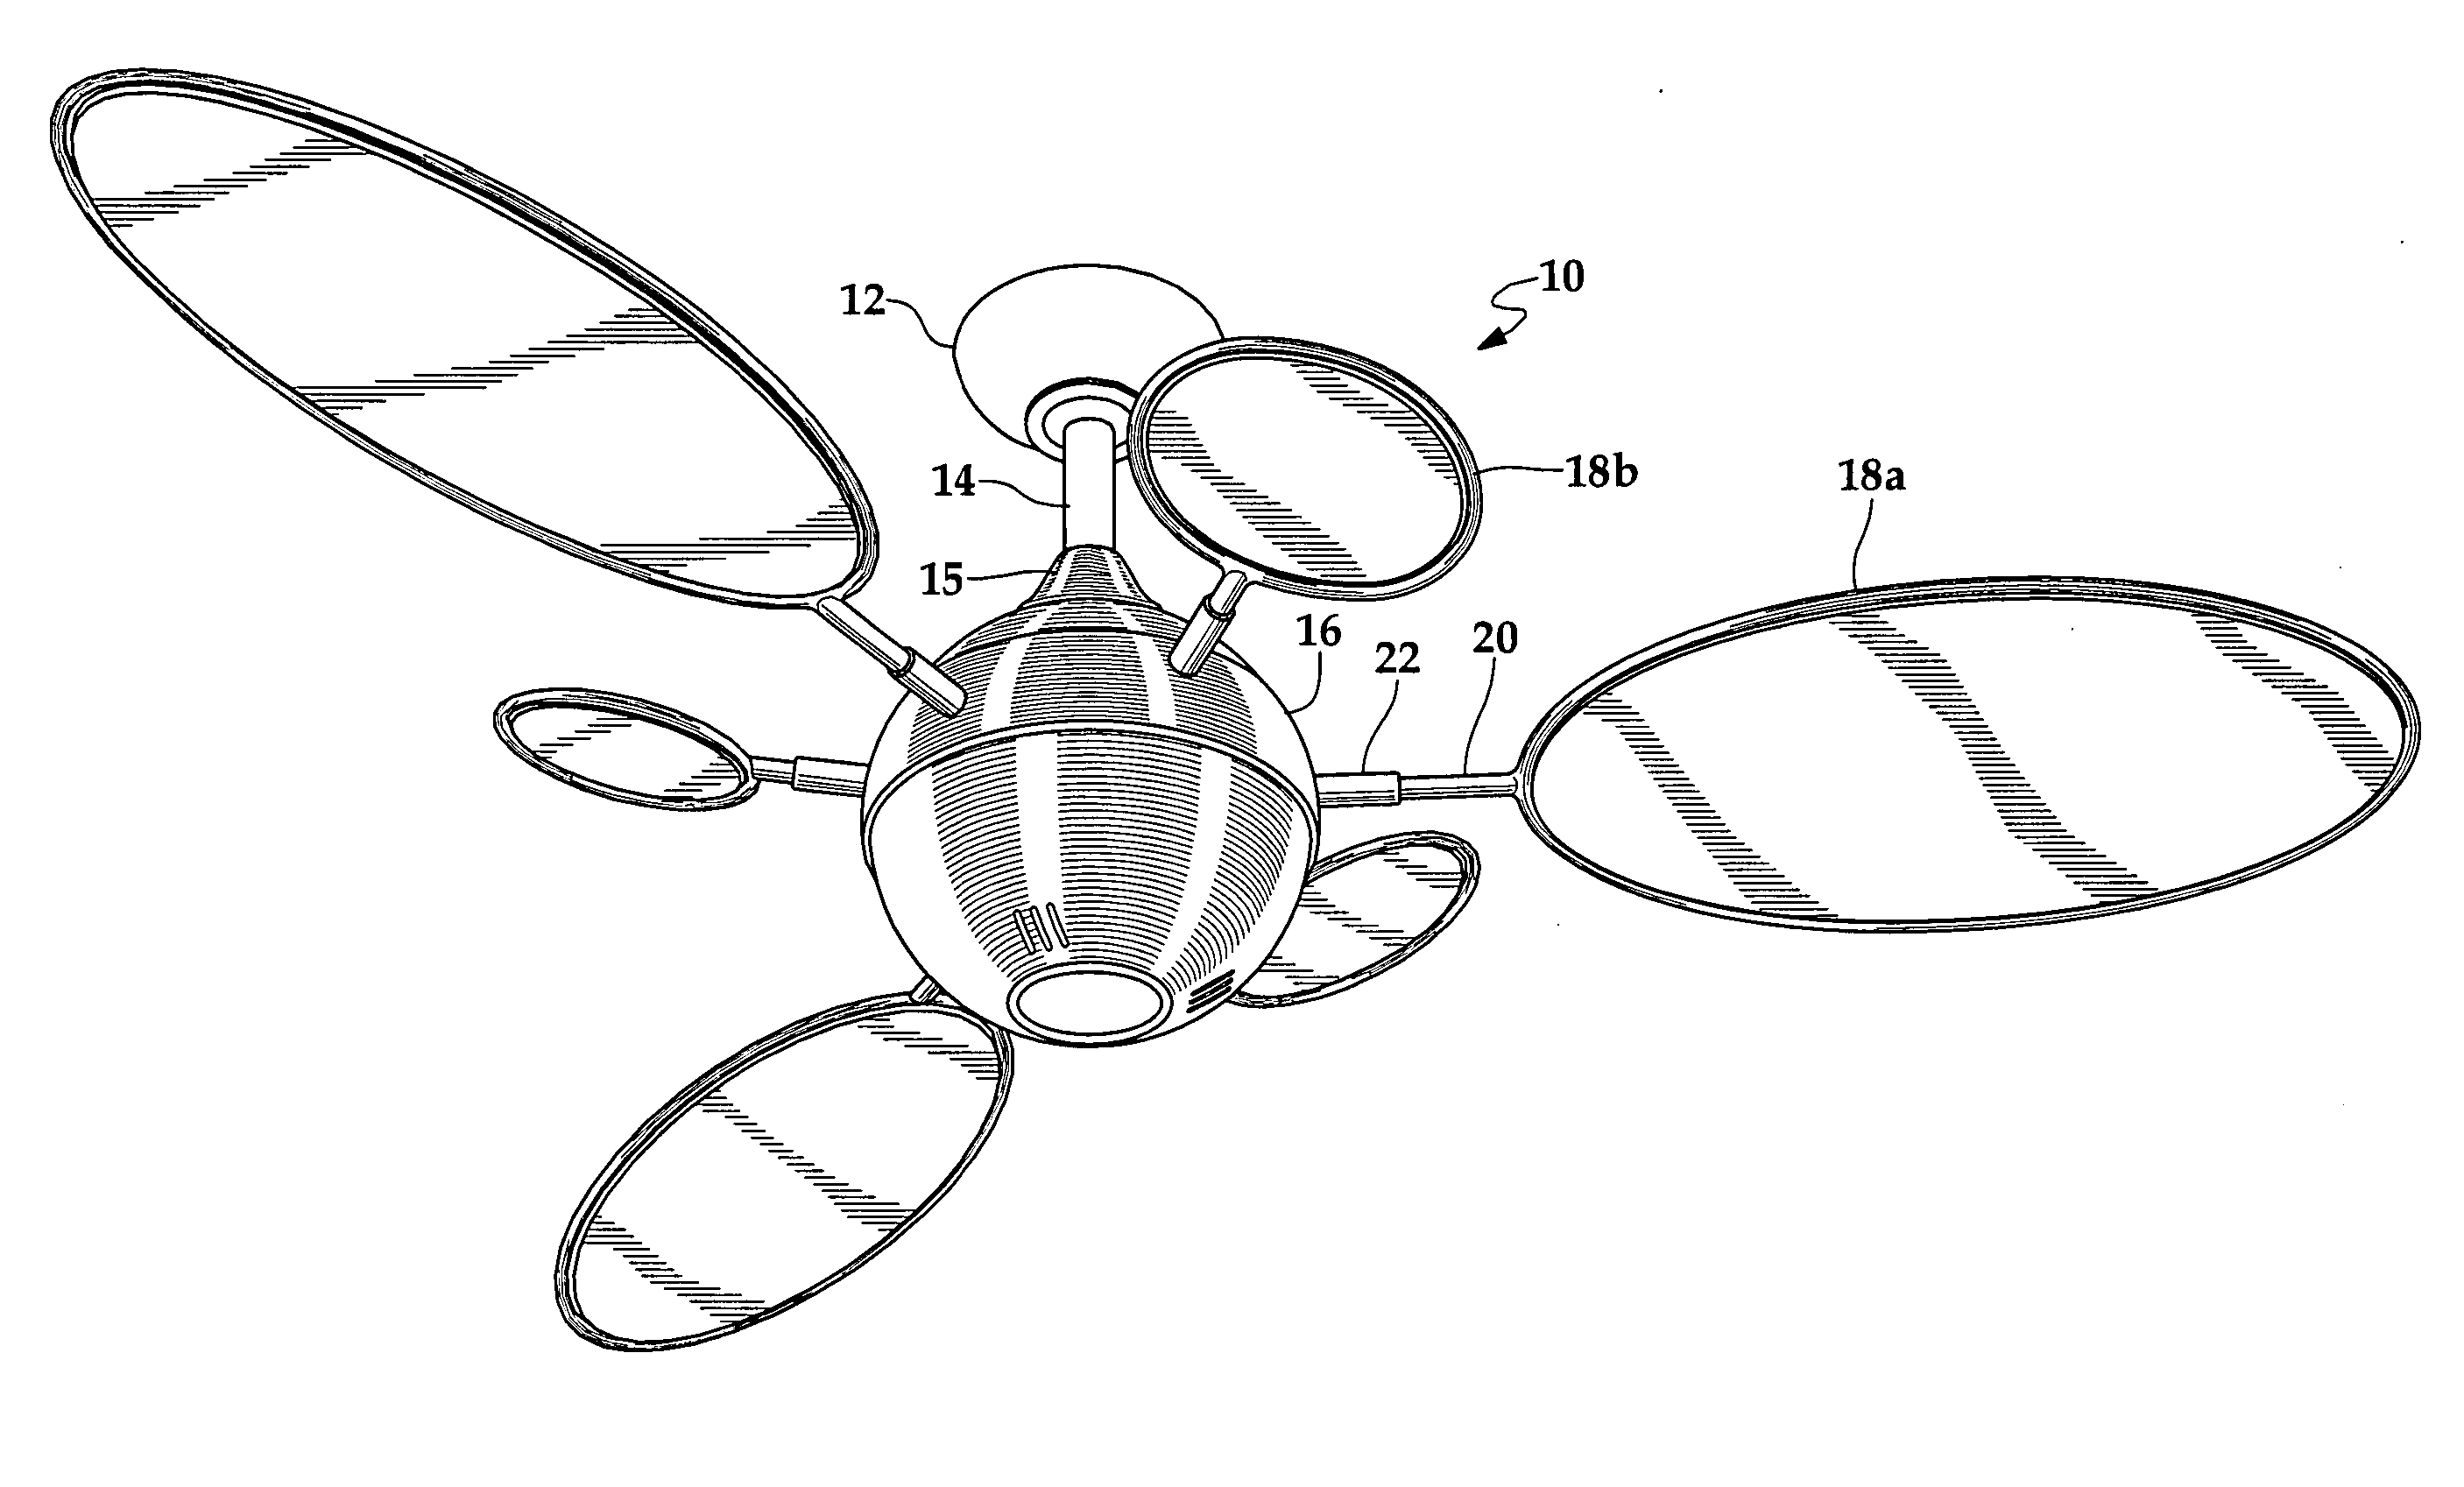 Ceiling fan blade attachment mechanism